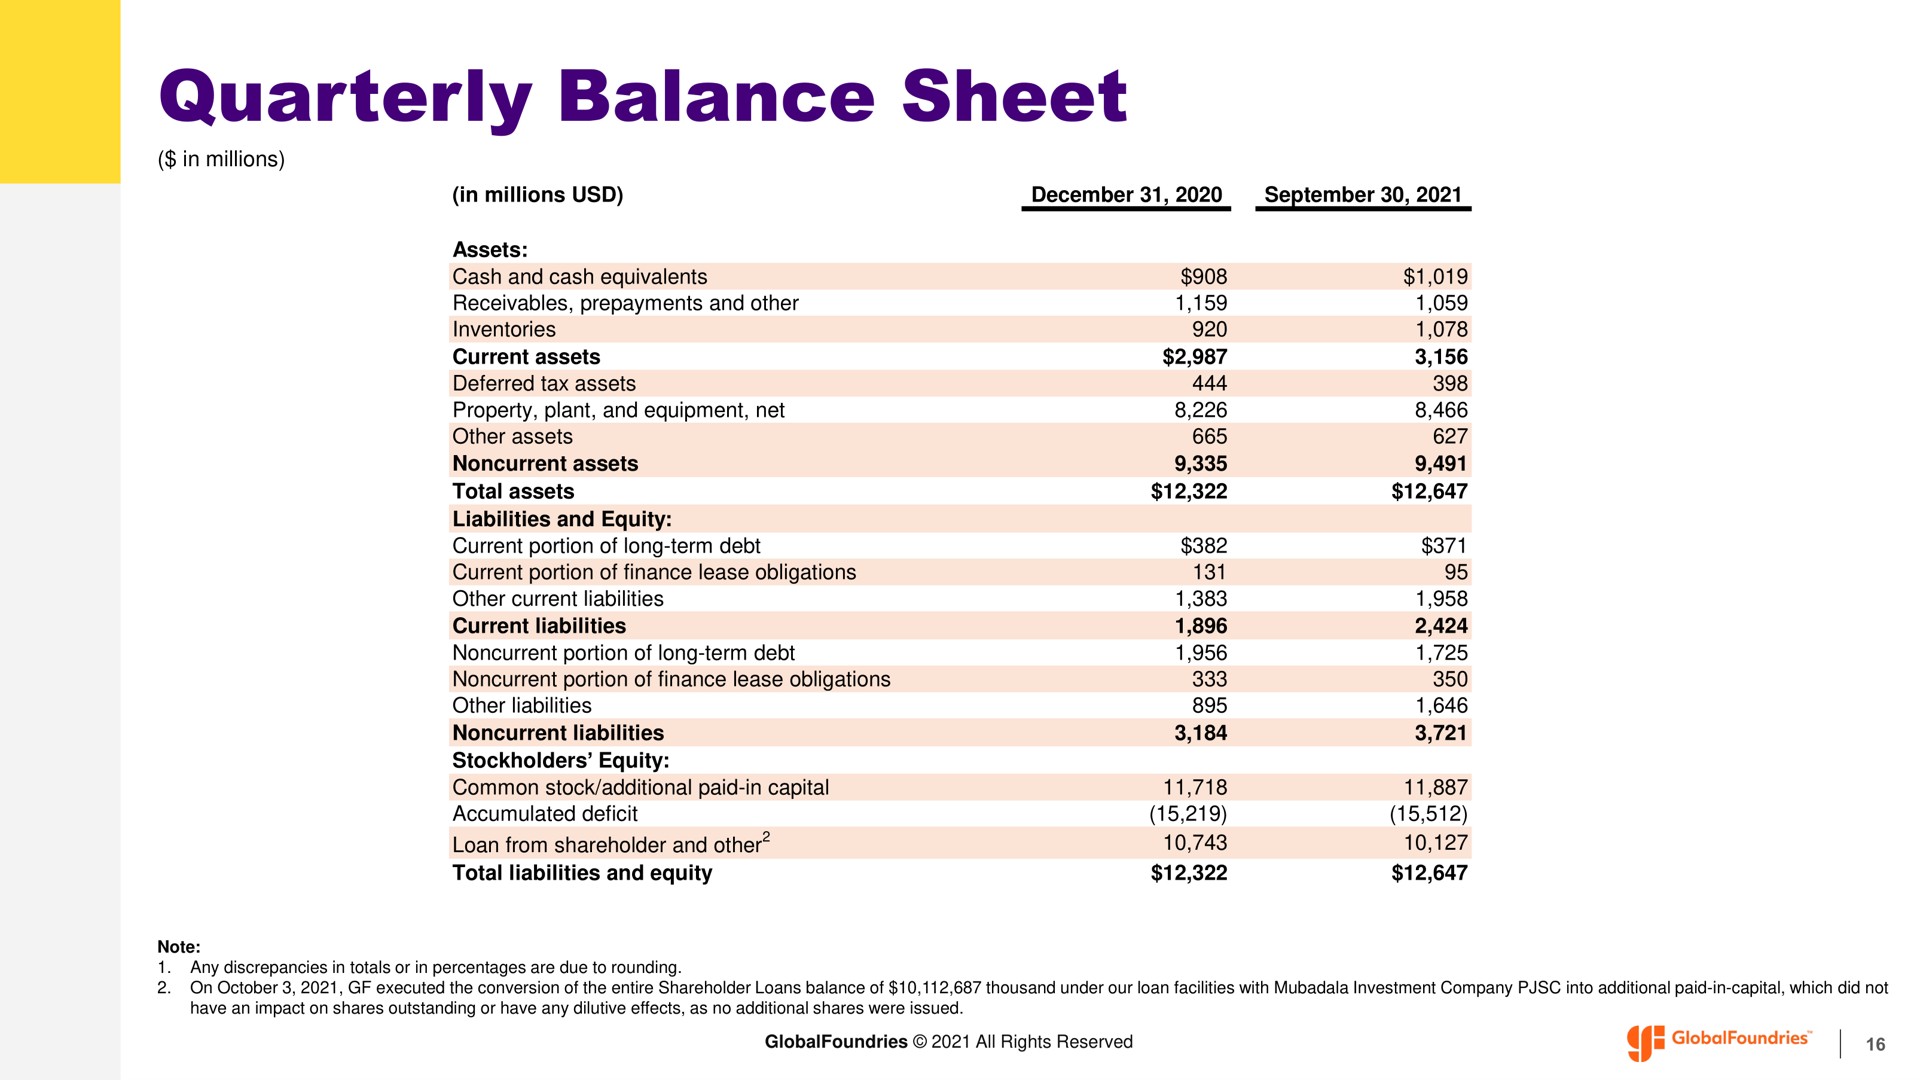 quarterly balance sheet | GlobalFoundries